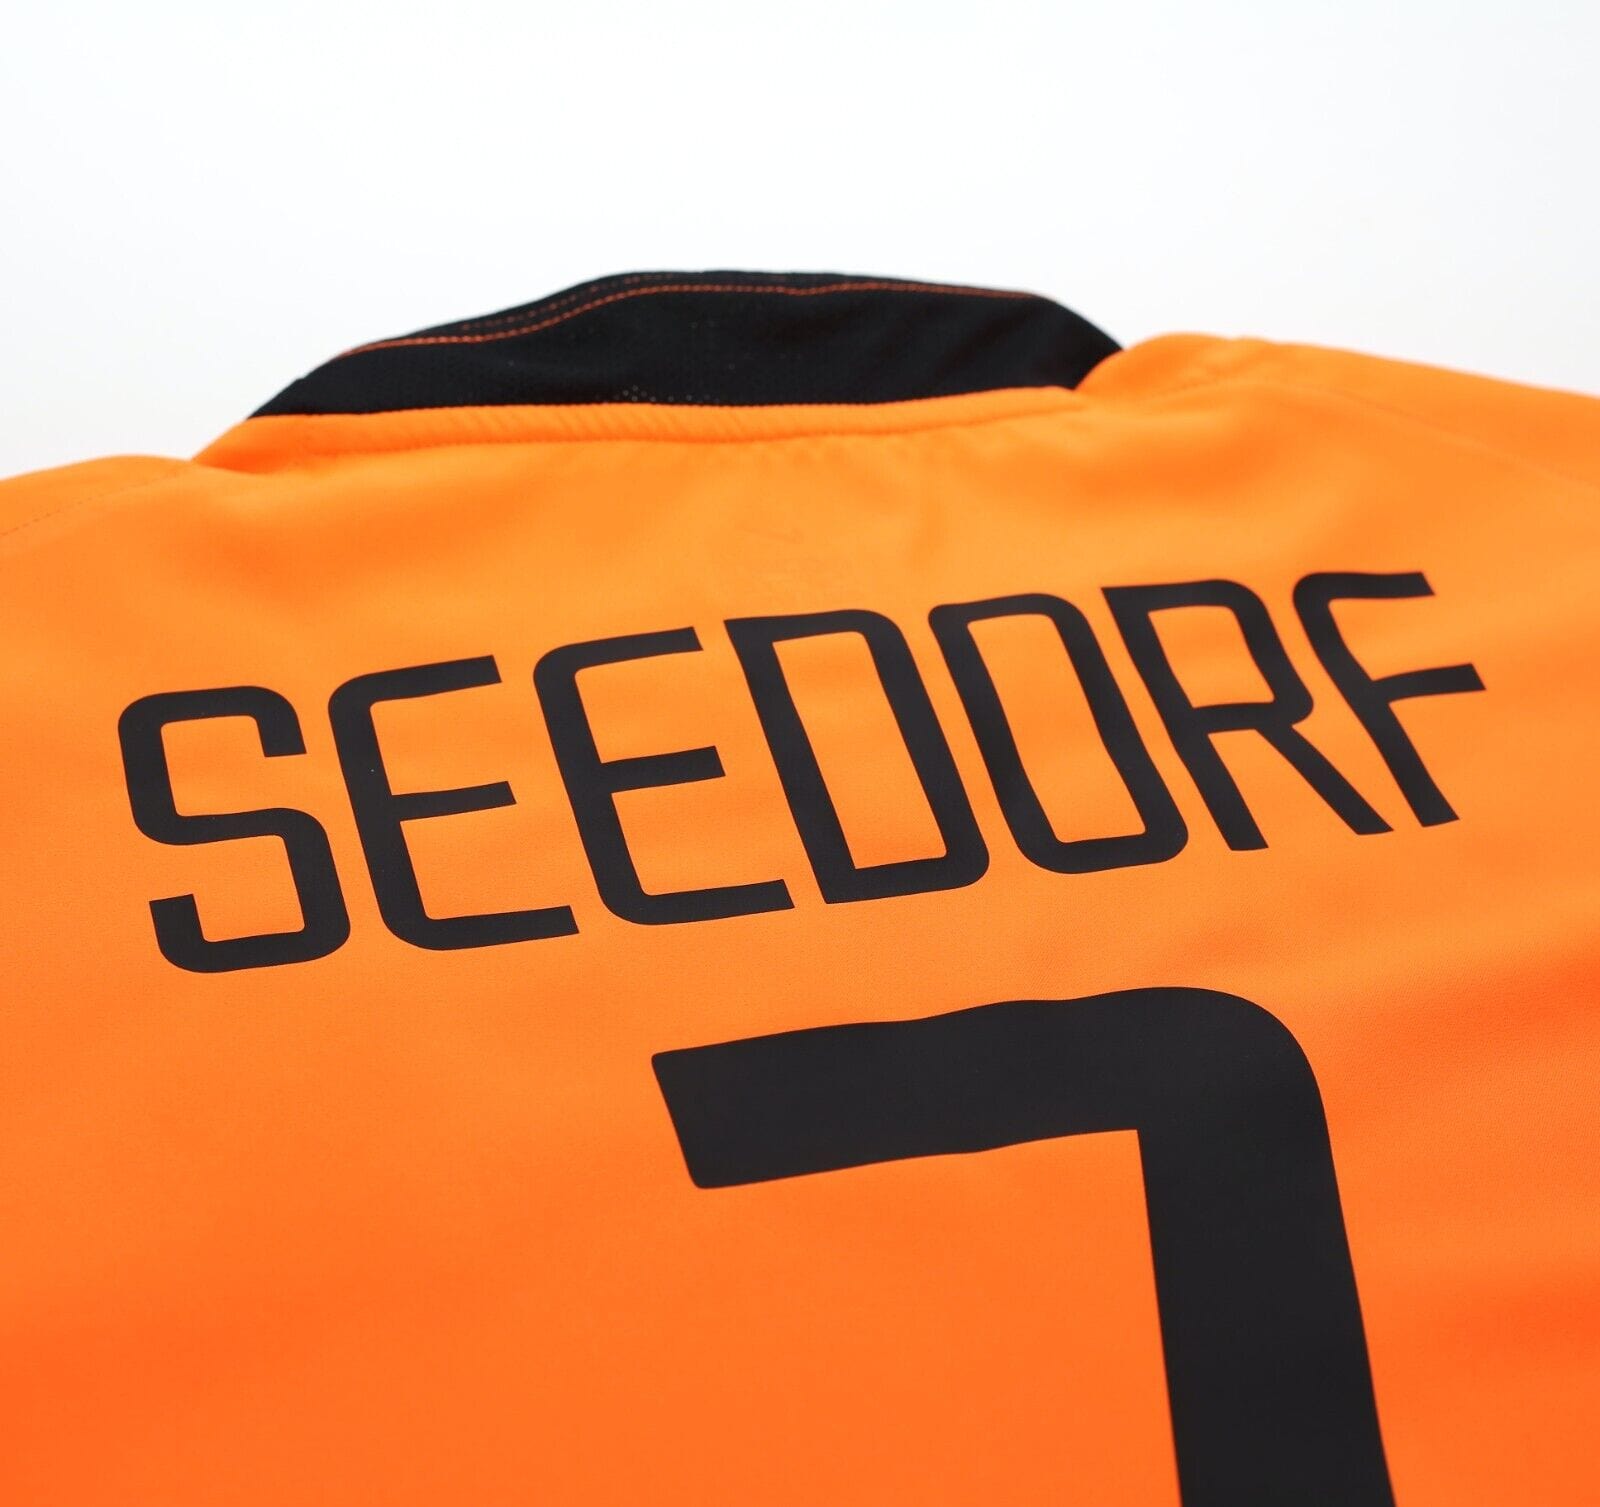 2002/04 SEEDORF #7 Holland Vintage Nike Home Football Shirt (M)